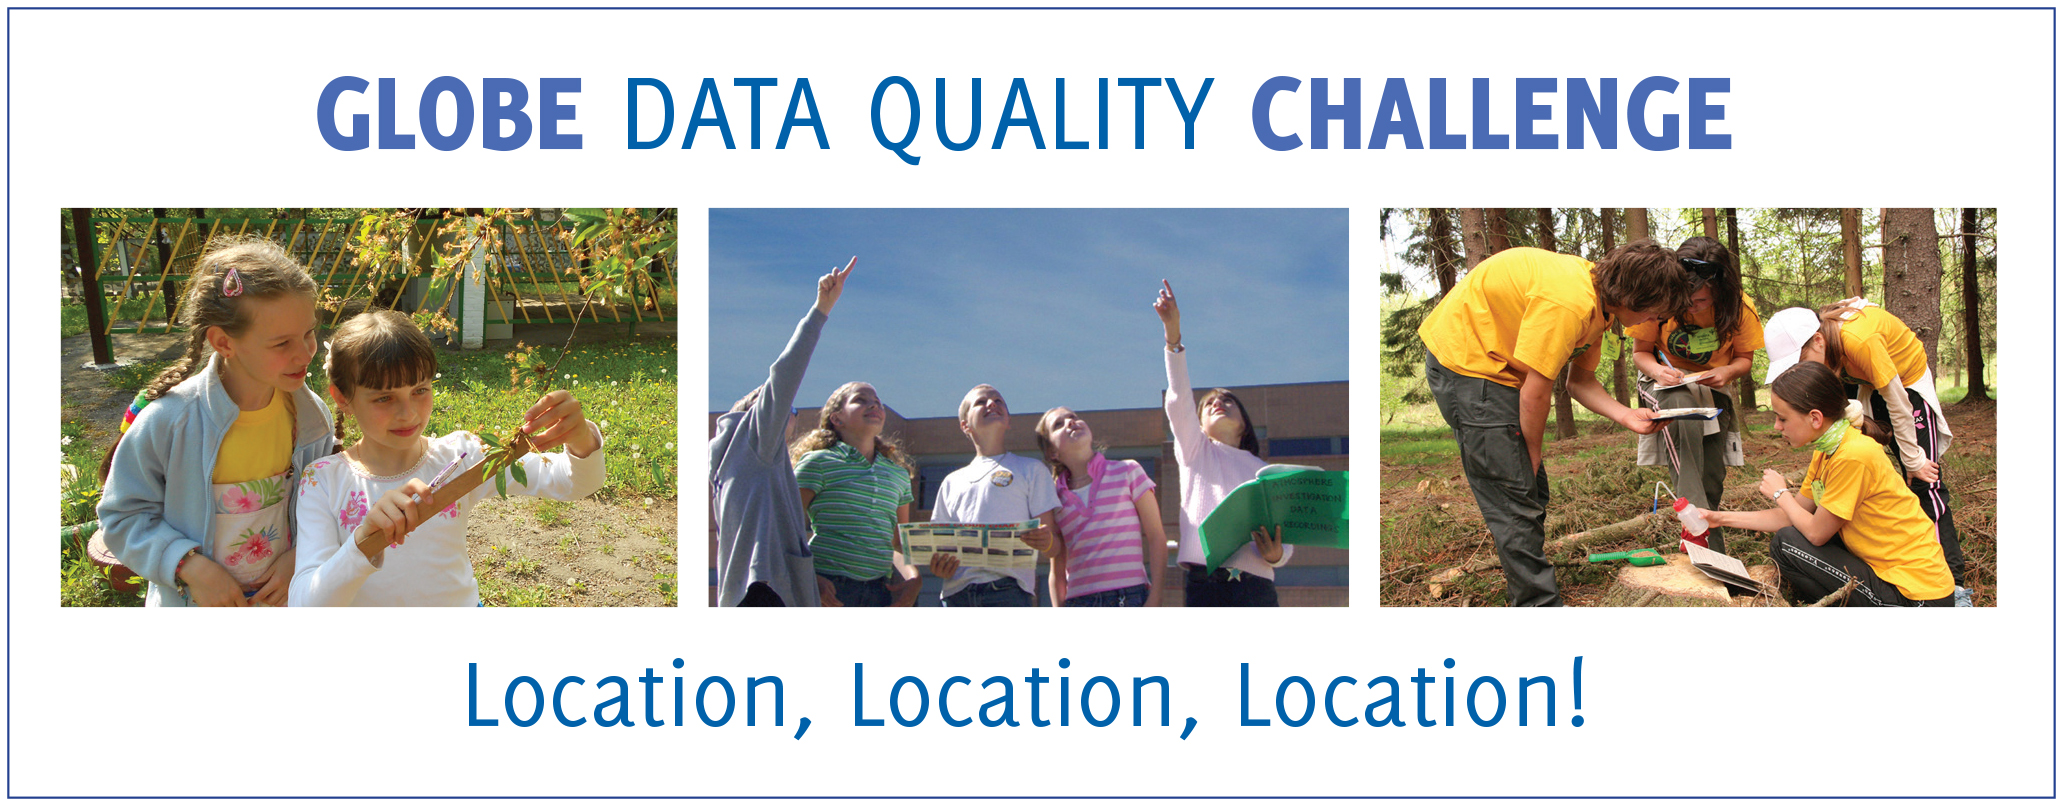 Data Quality Challenge 2016 Revised